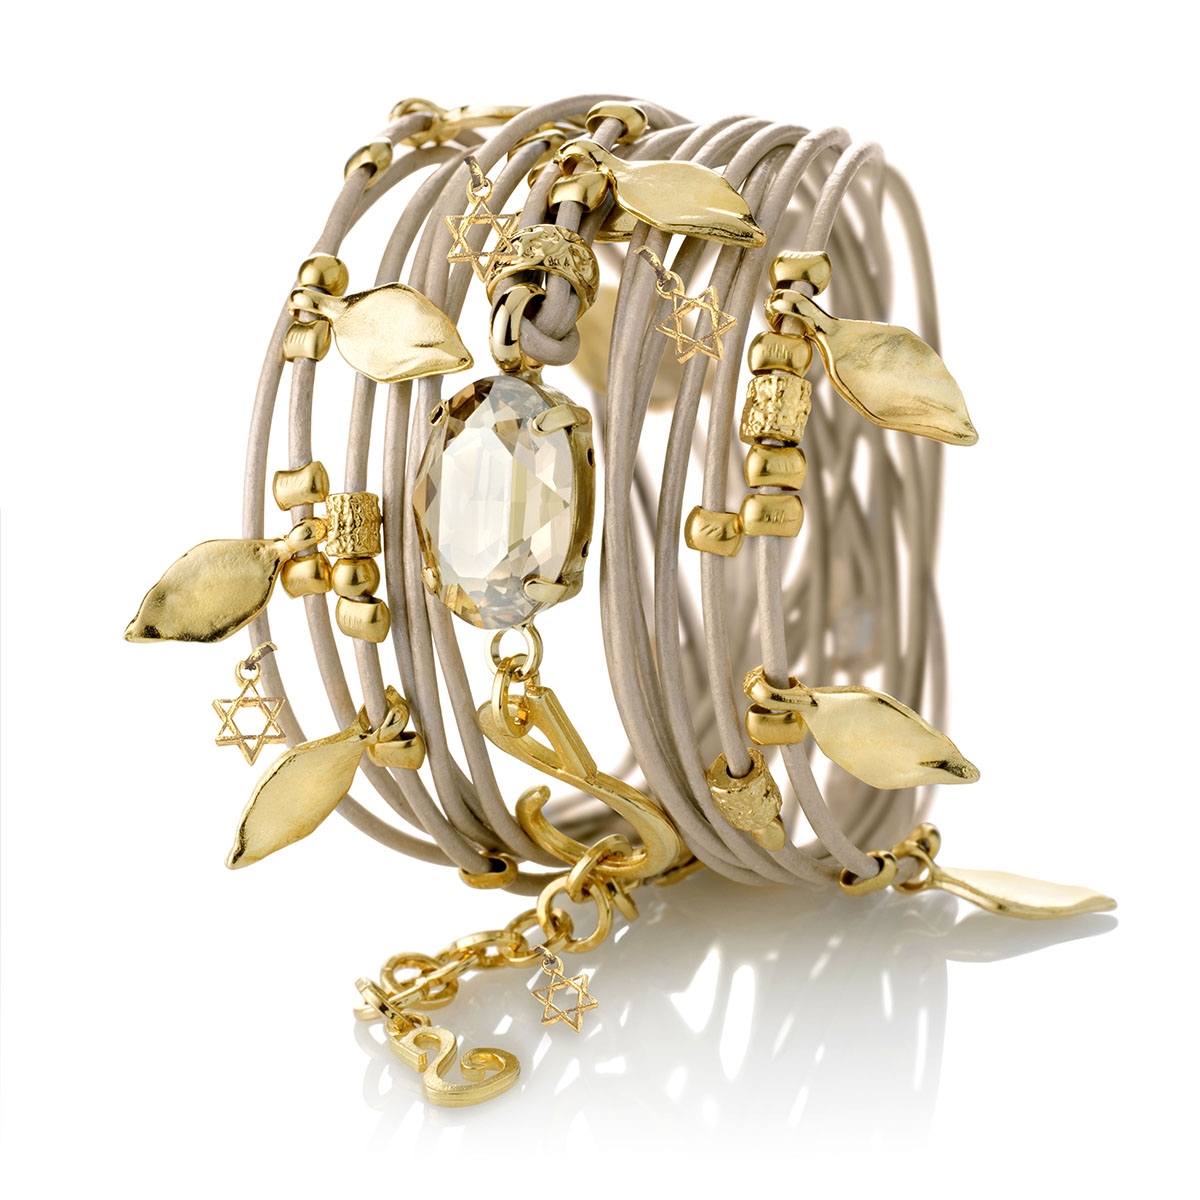 SEA Smadar Eliasaf Leather Wrap Around Bracelet with Gold-Plated Elements - 1